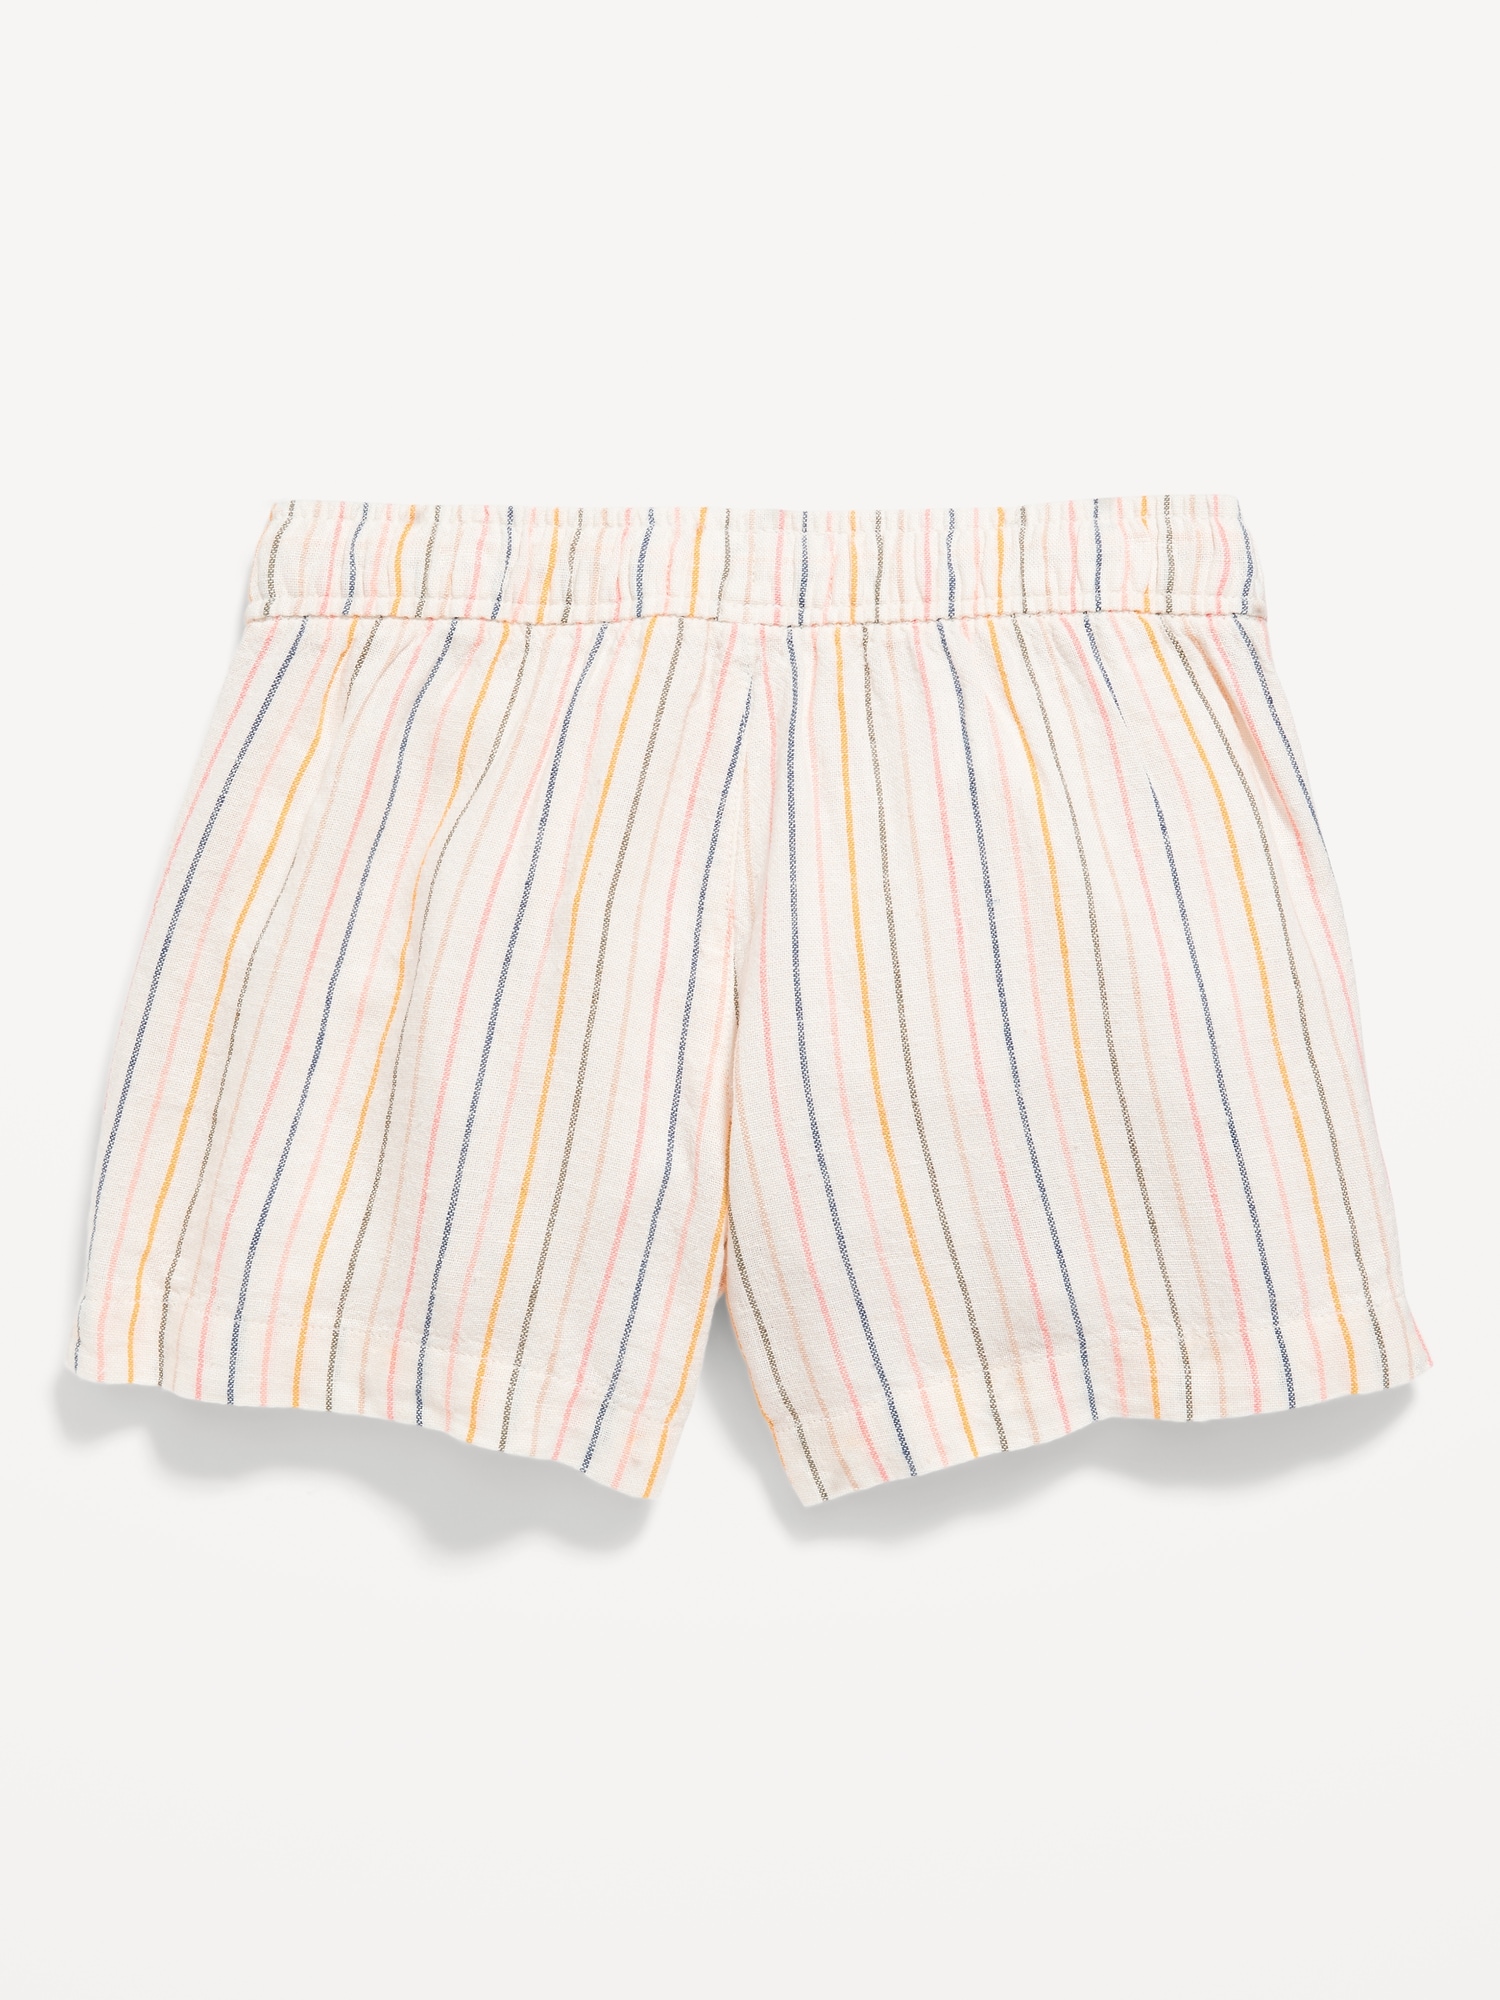 Blue Wide Bermuda High Waist Shorts - Size: 4 - H&M